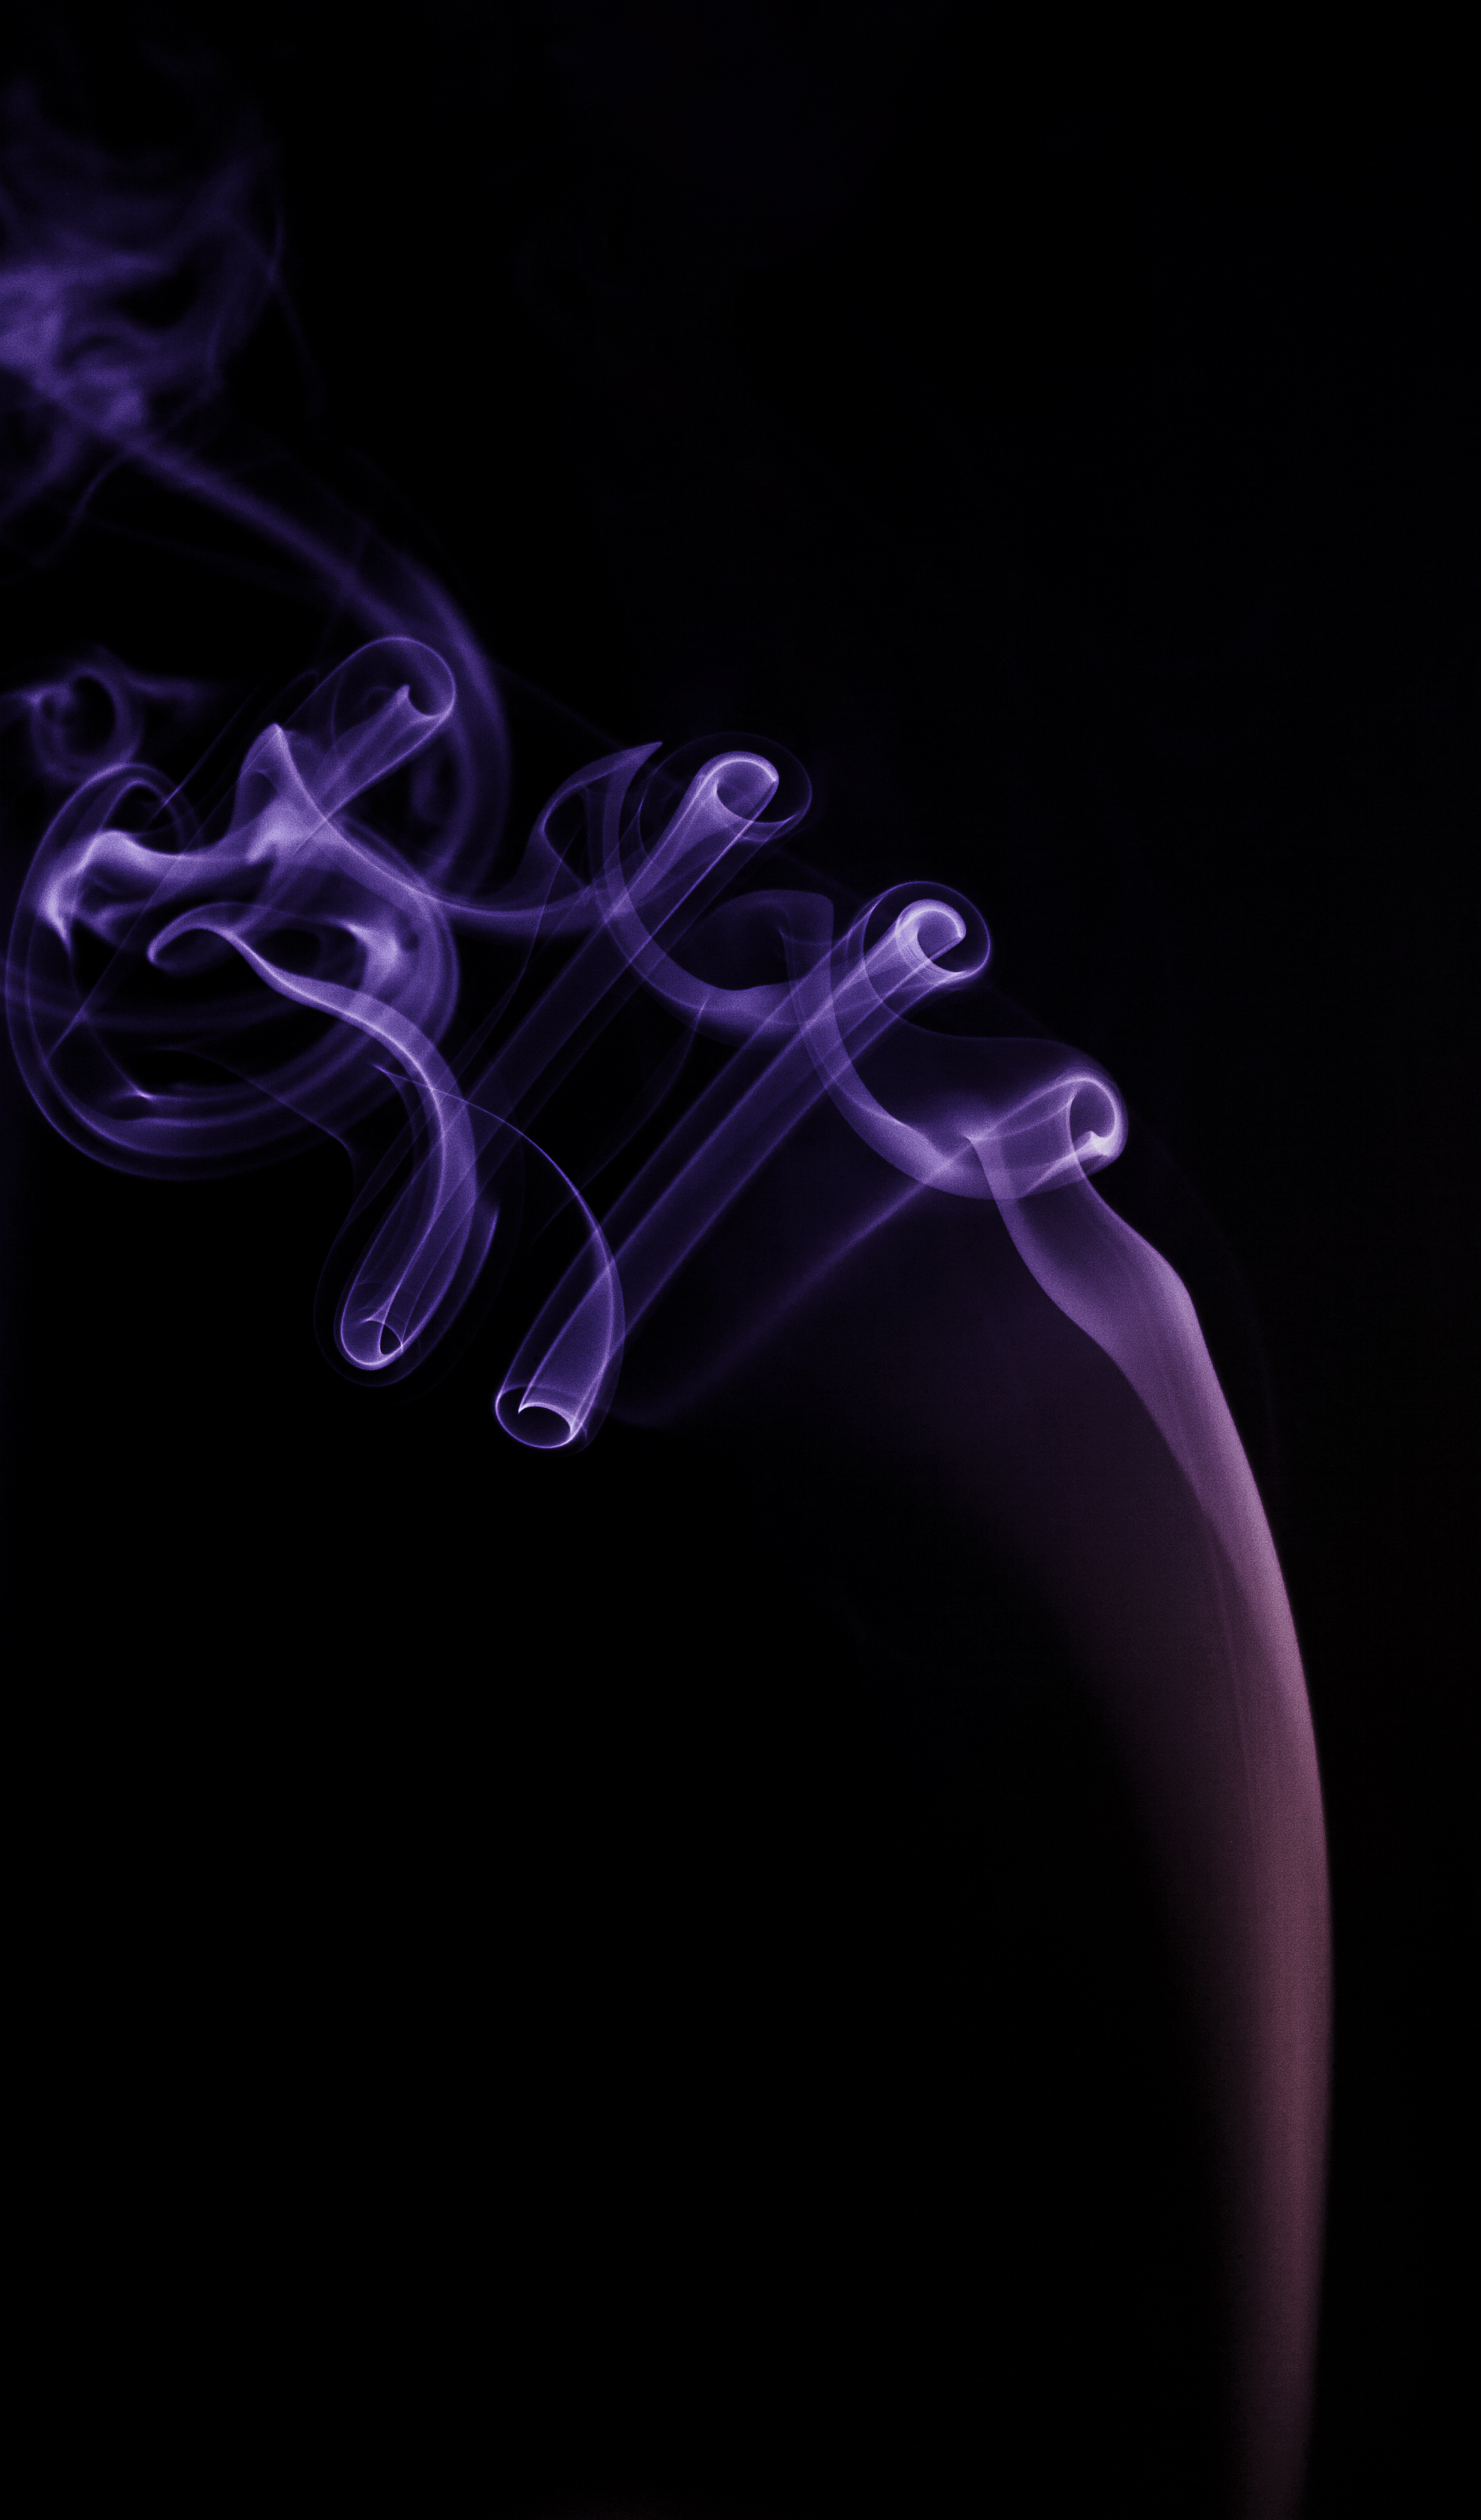 violet, abstract, smoke, black, purple, twisting, torsion